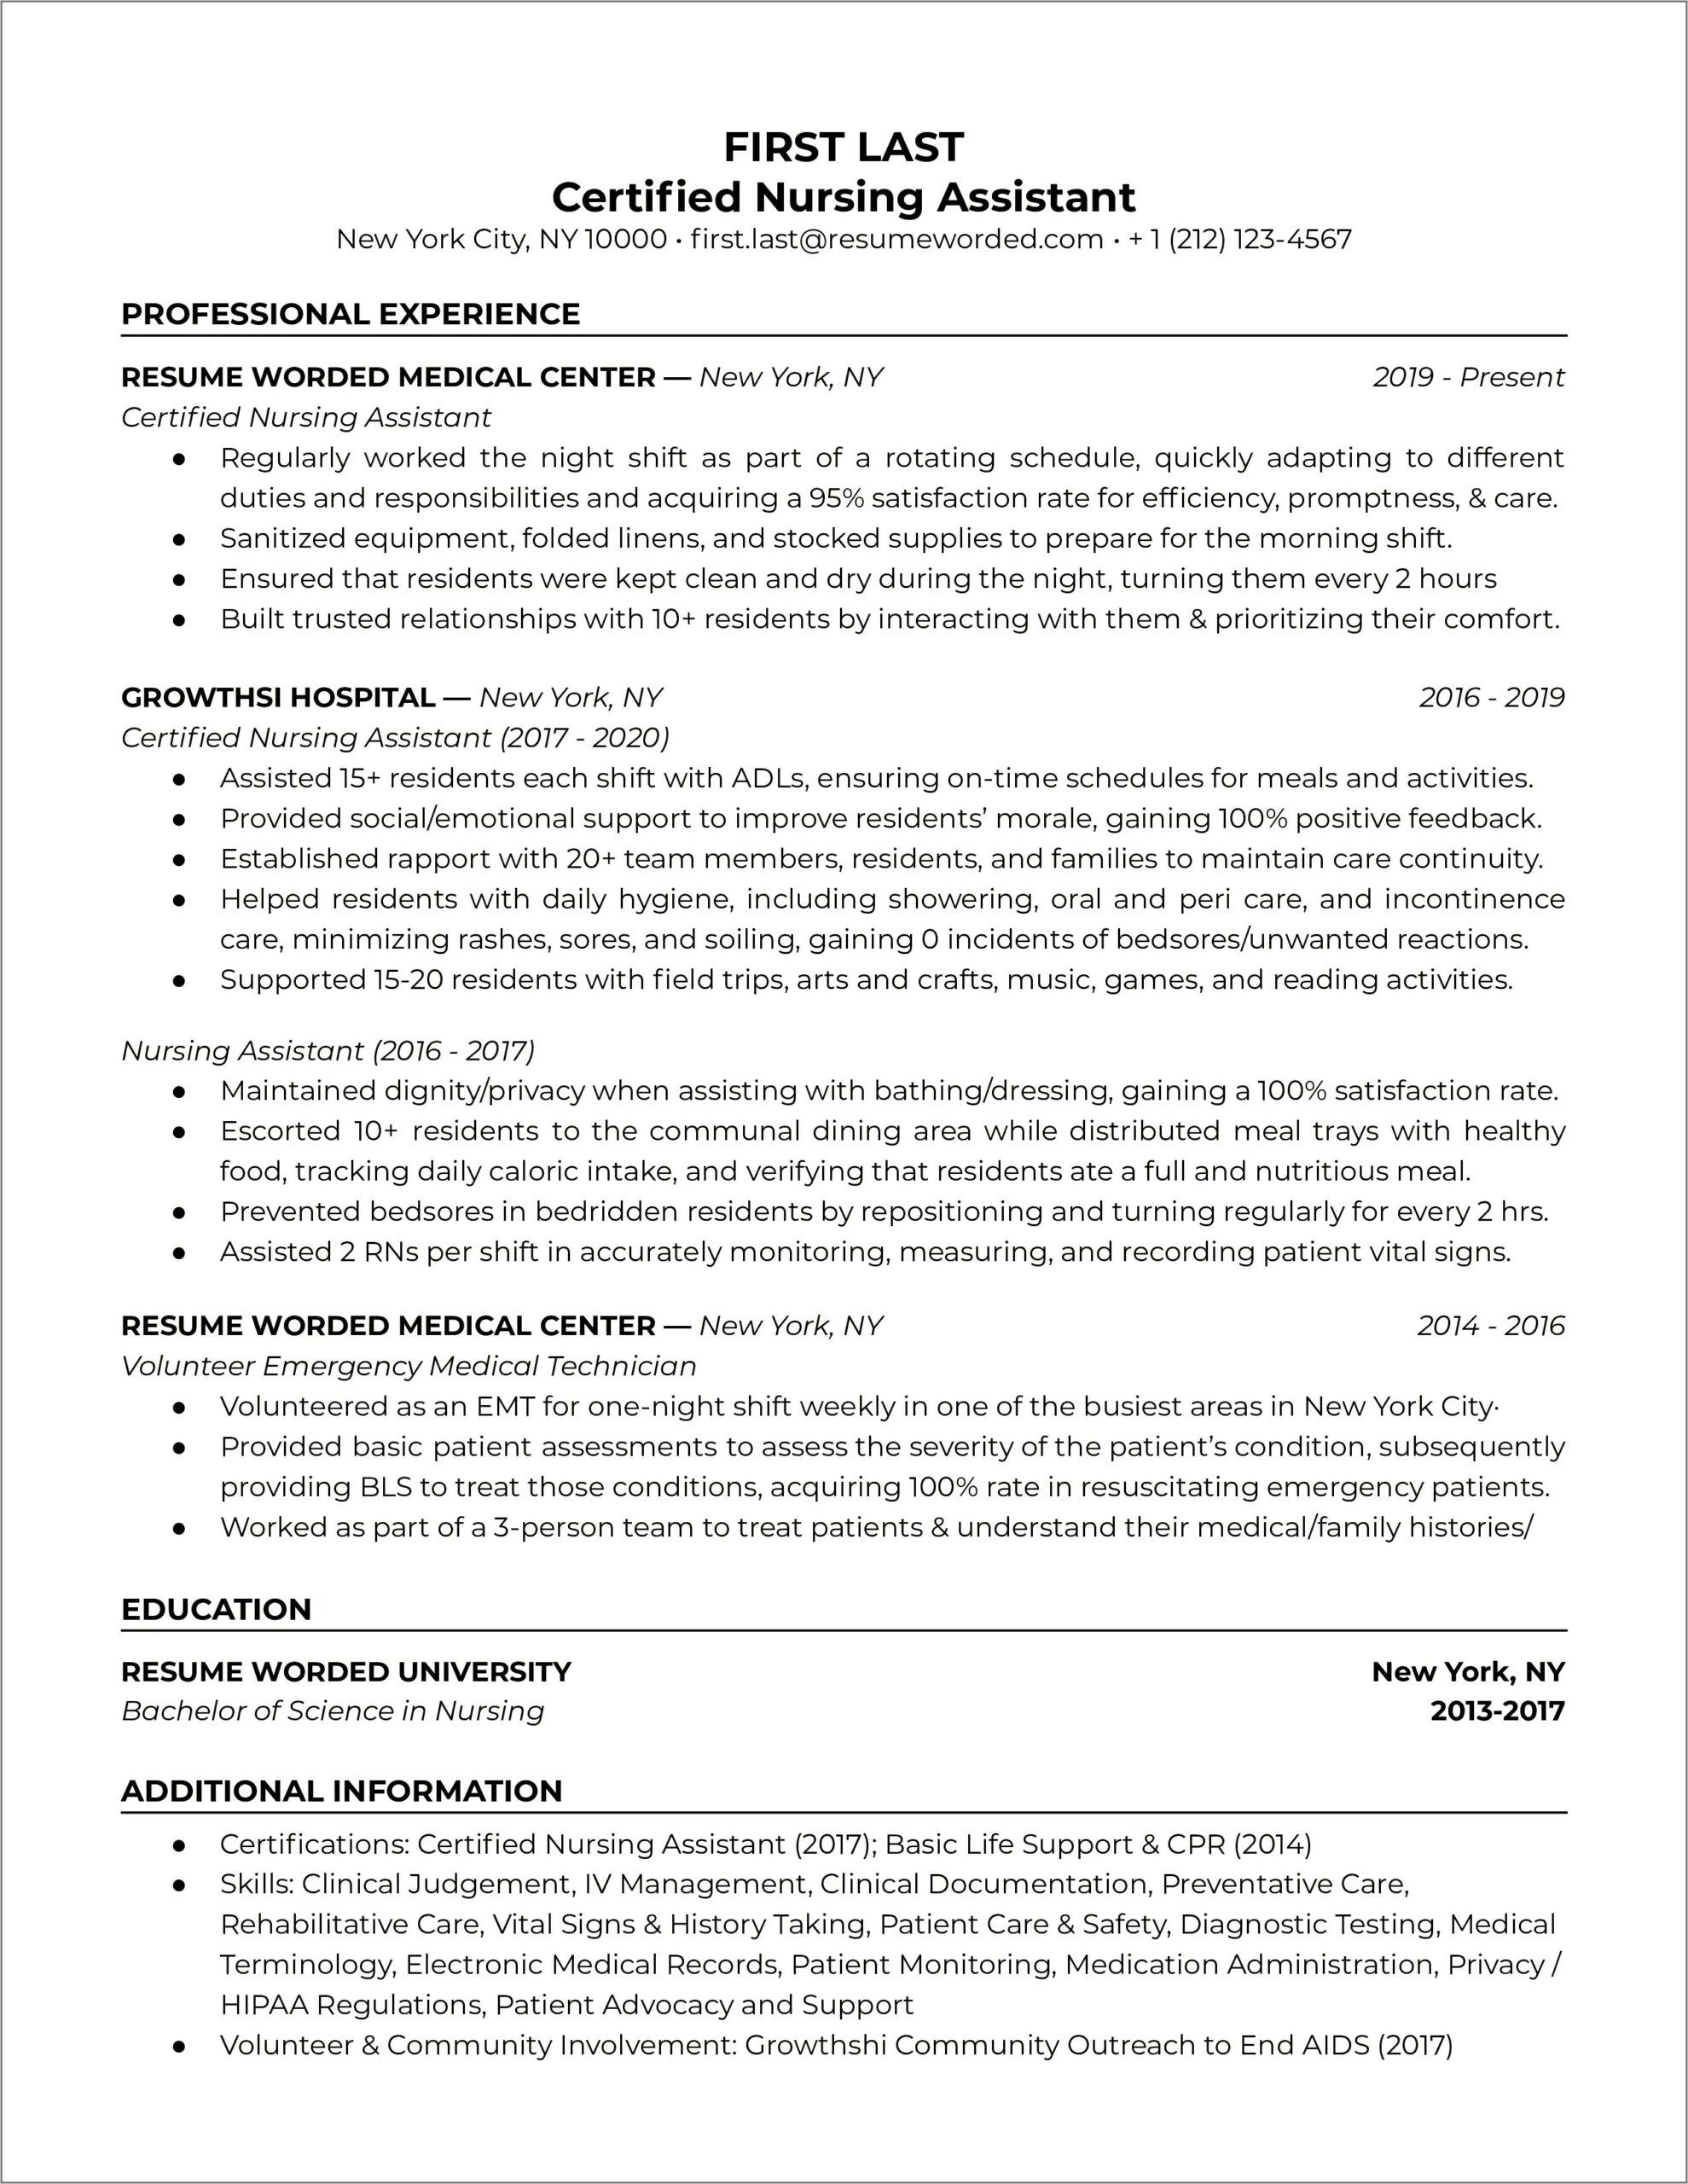 Nursing Assistant Job Resume Summary